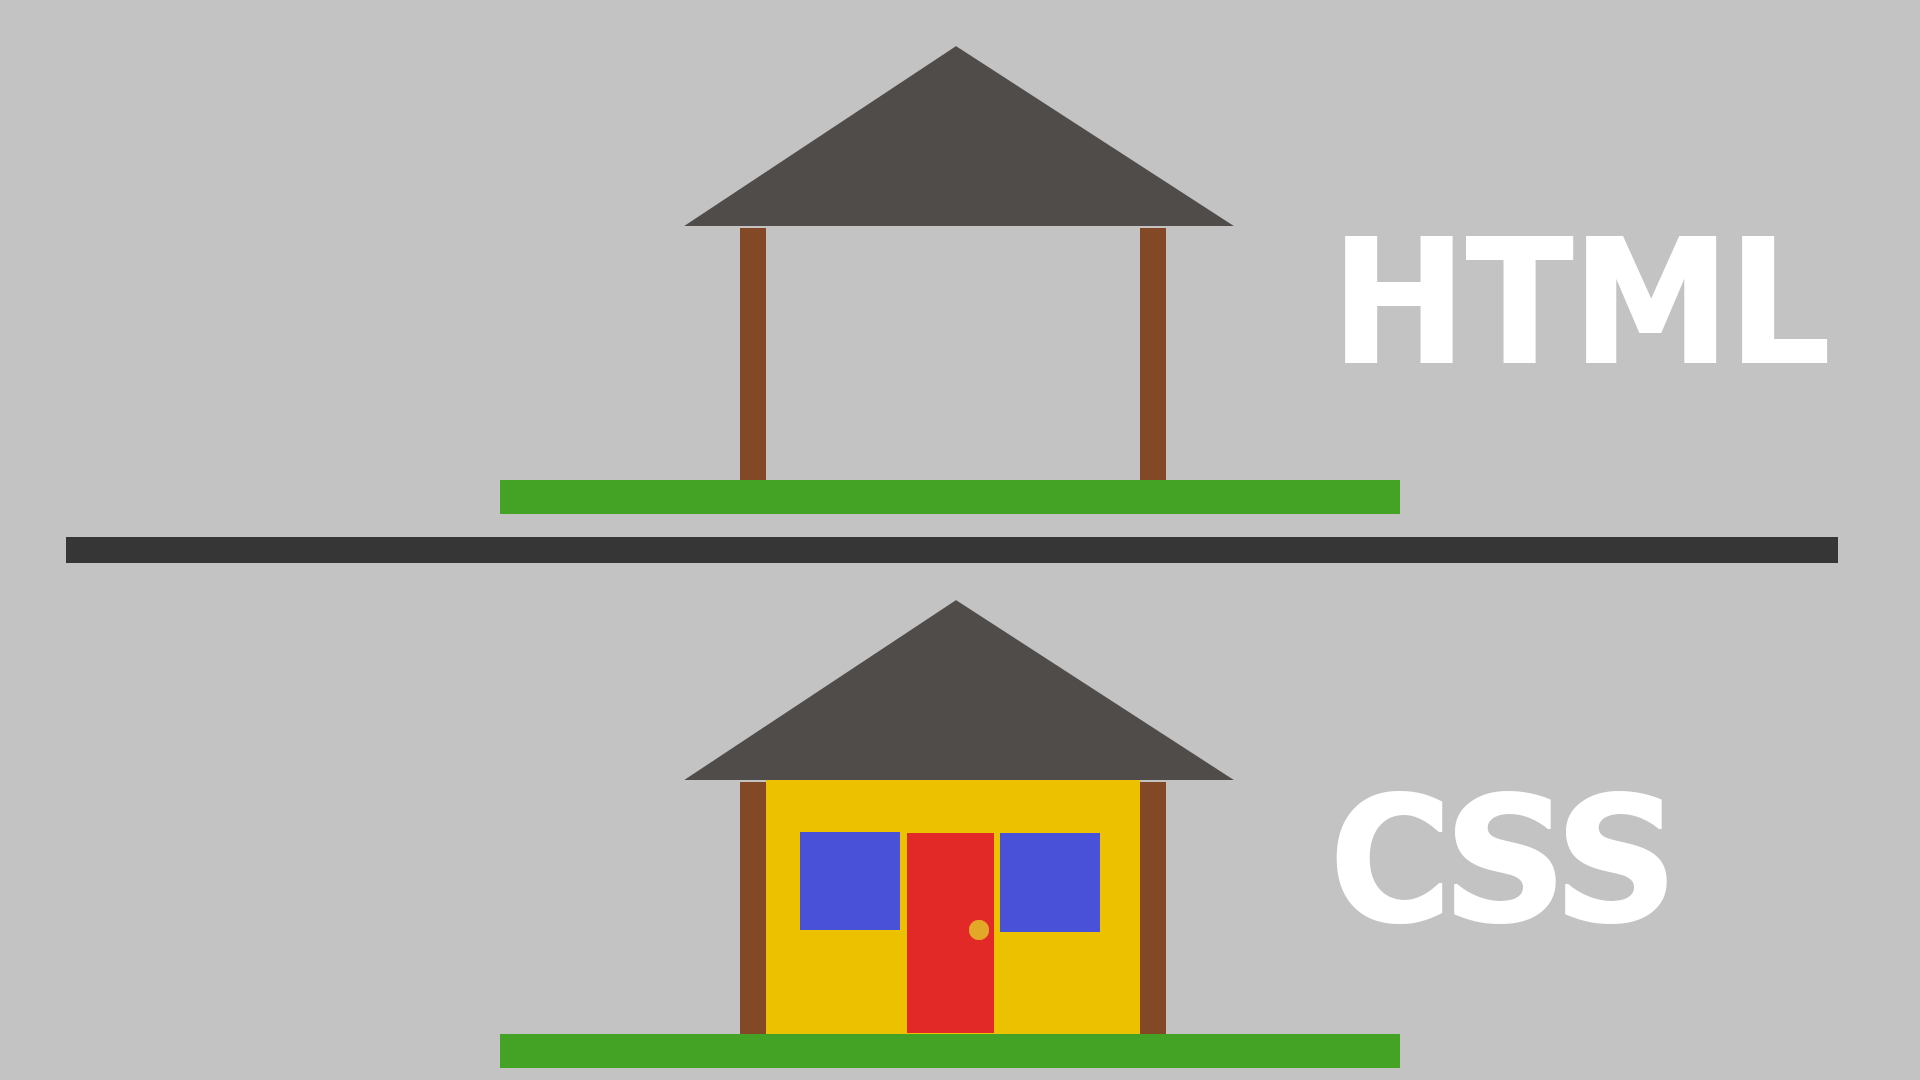 Visual analogy of HTML vs CSS